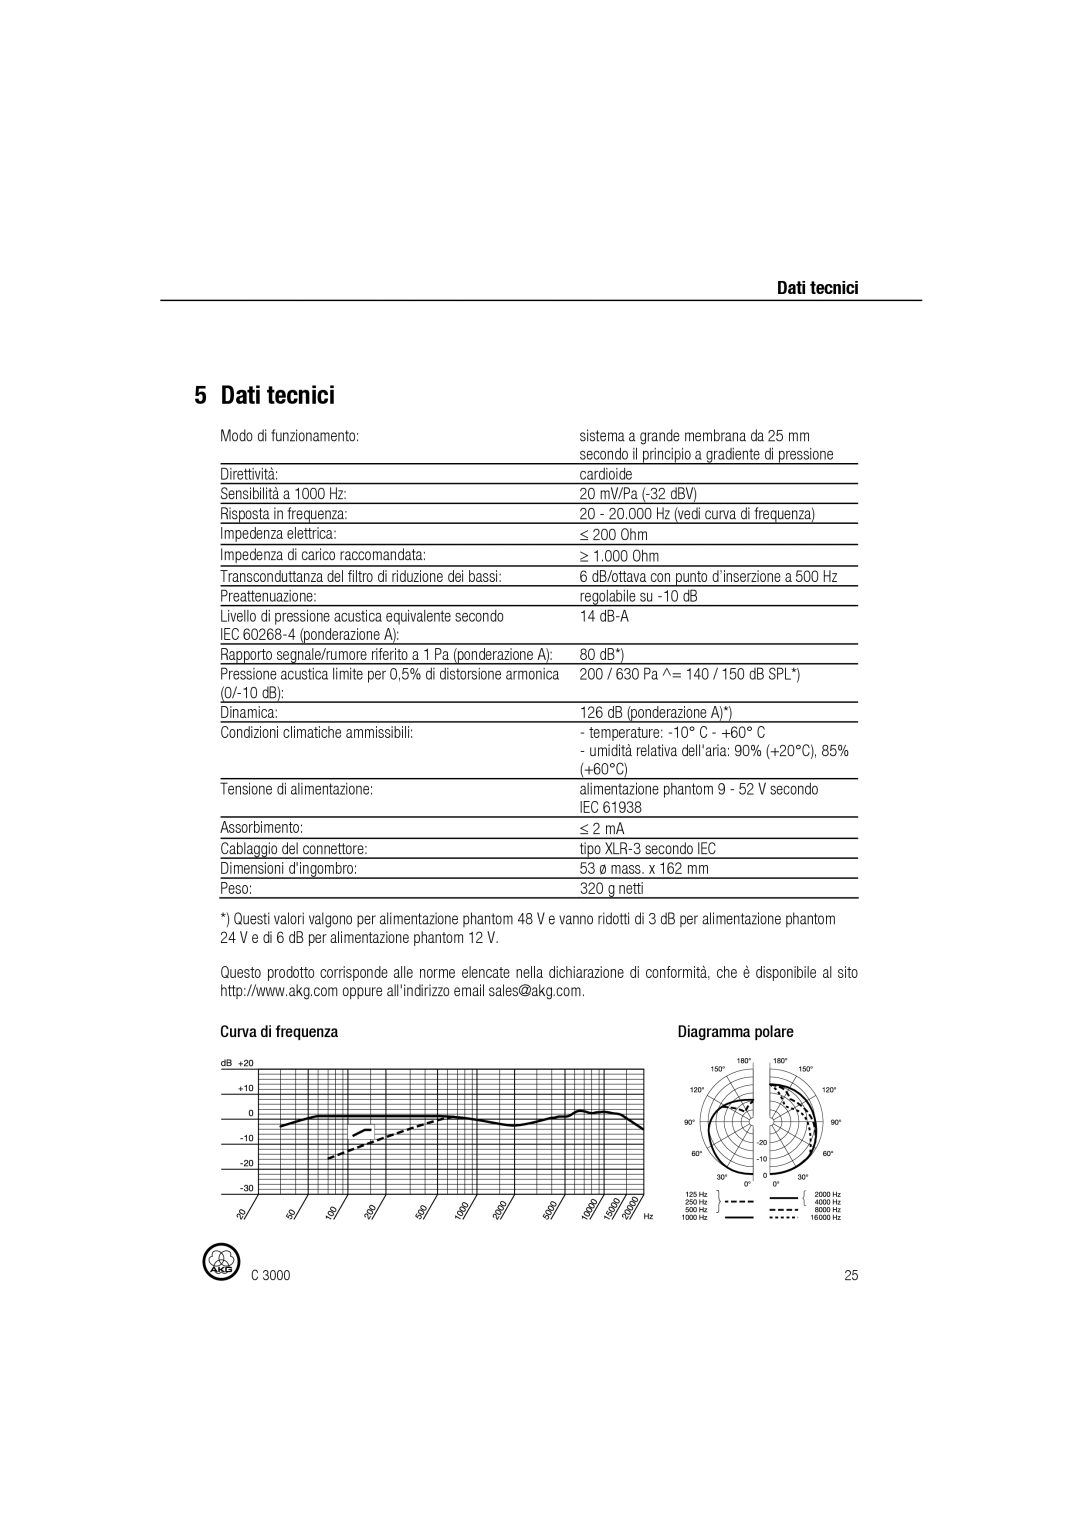 AKG Acoustics C 3000 manual Dati tecnici 